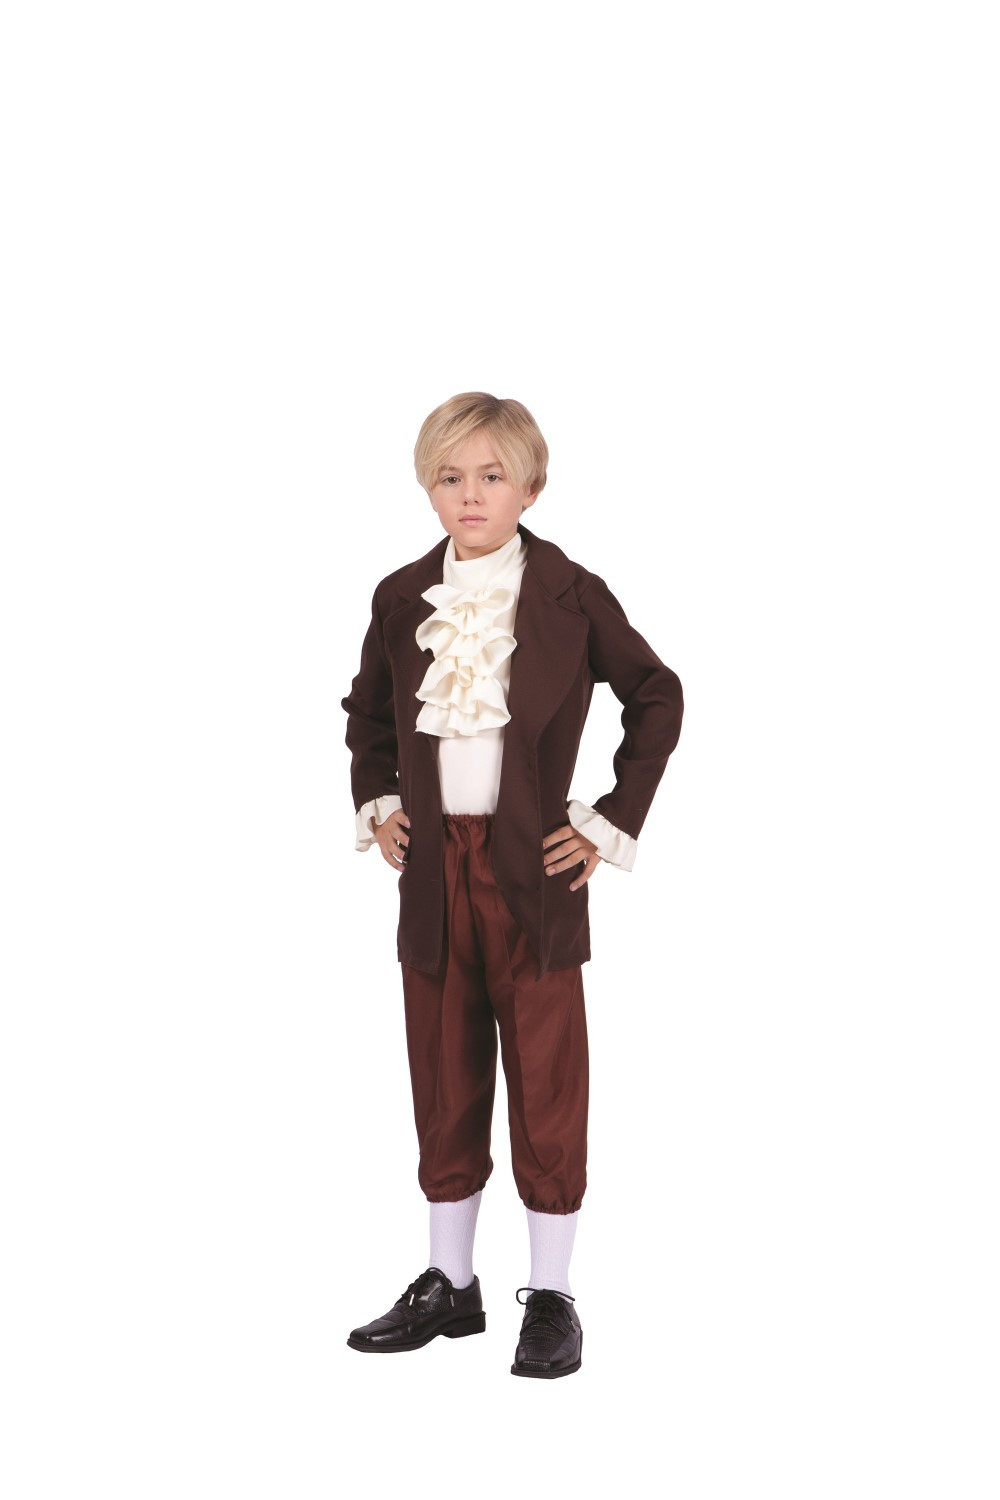 Best ideas about Thomas Jefferson Costume DIY
. Save or Pin Thomas Jefferson Child Costume Now.